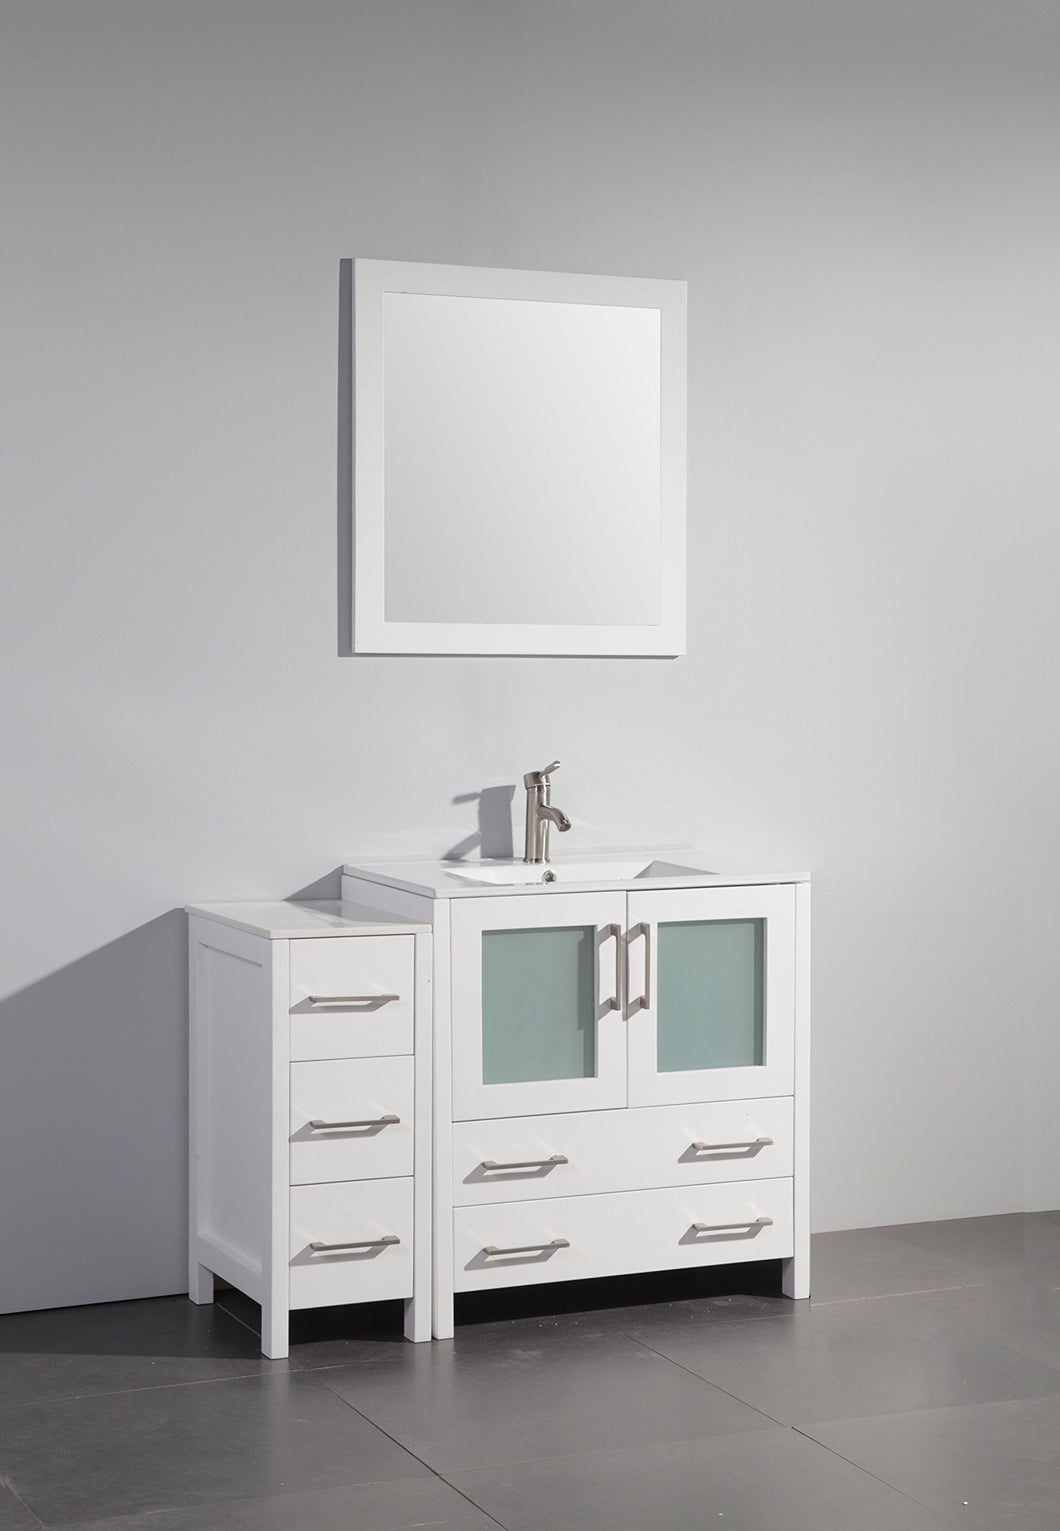 New vanity art 42 inch single sink bathroom vanity set free mirror compact 2 door 5 drawer with white ceramic top perfect bathroom organizer white